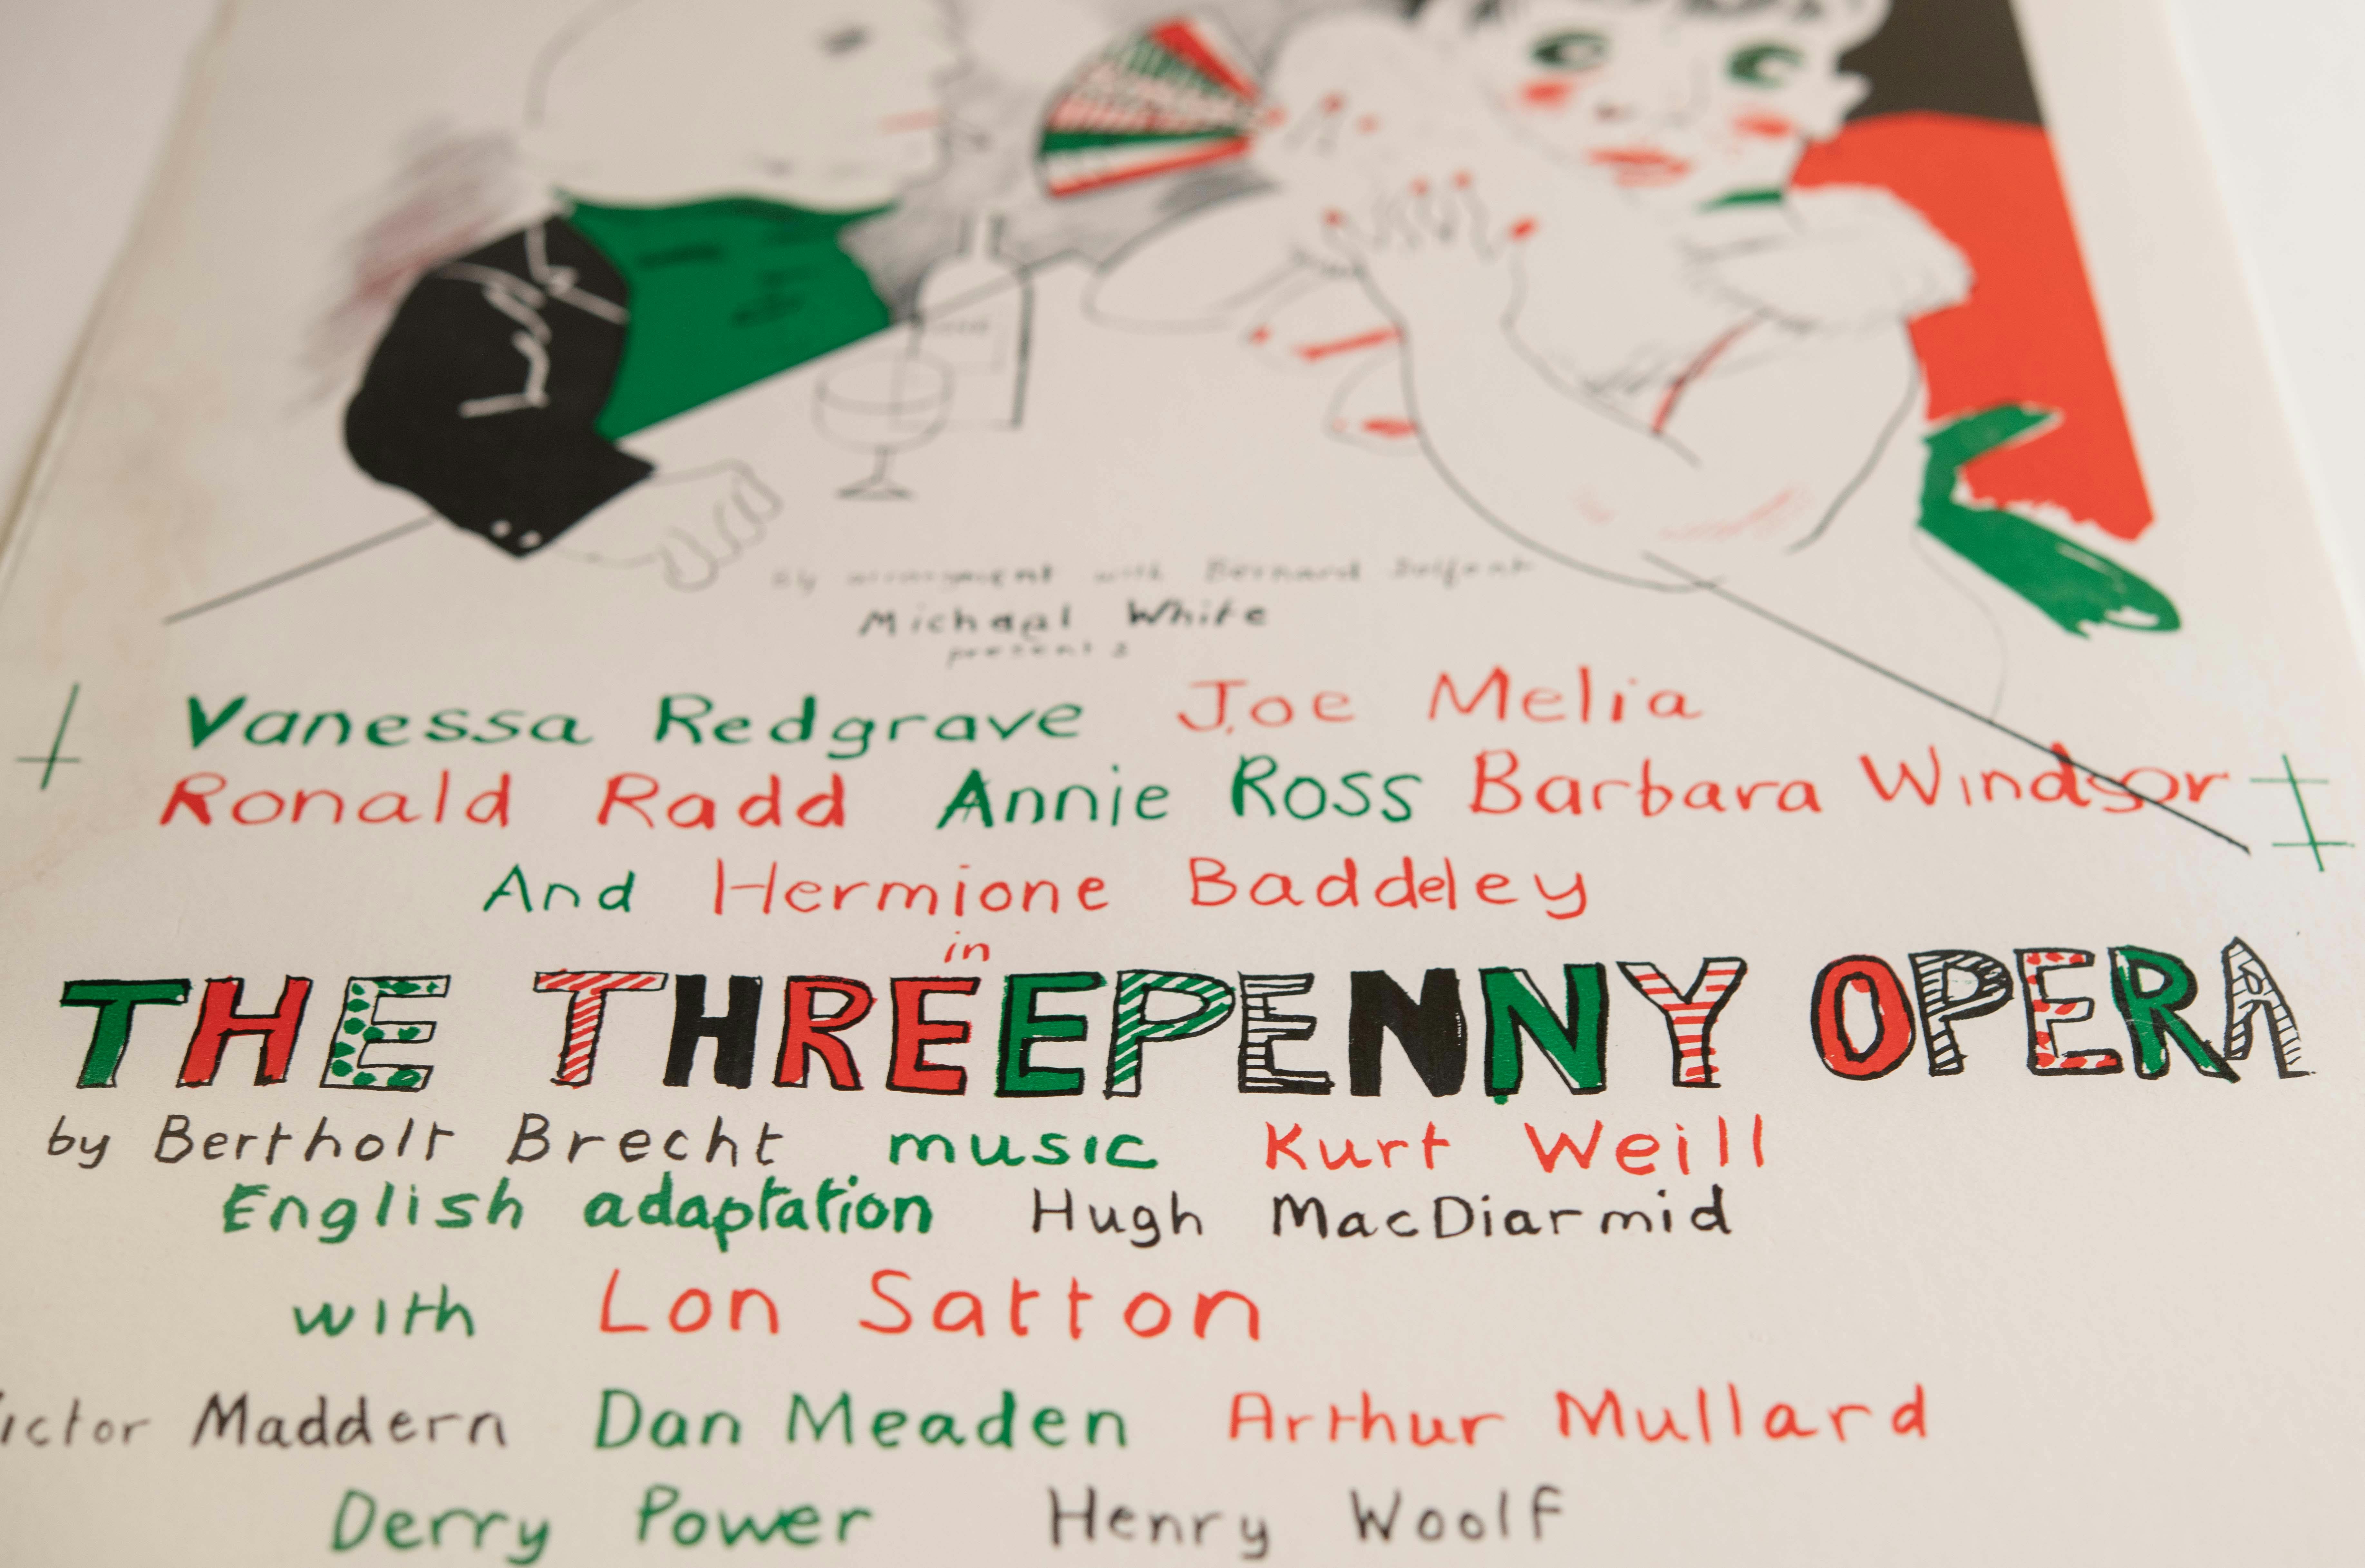 David Hockney’s 1972 Threepenny Opera poster